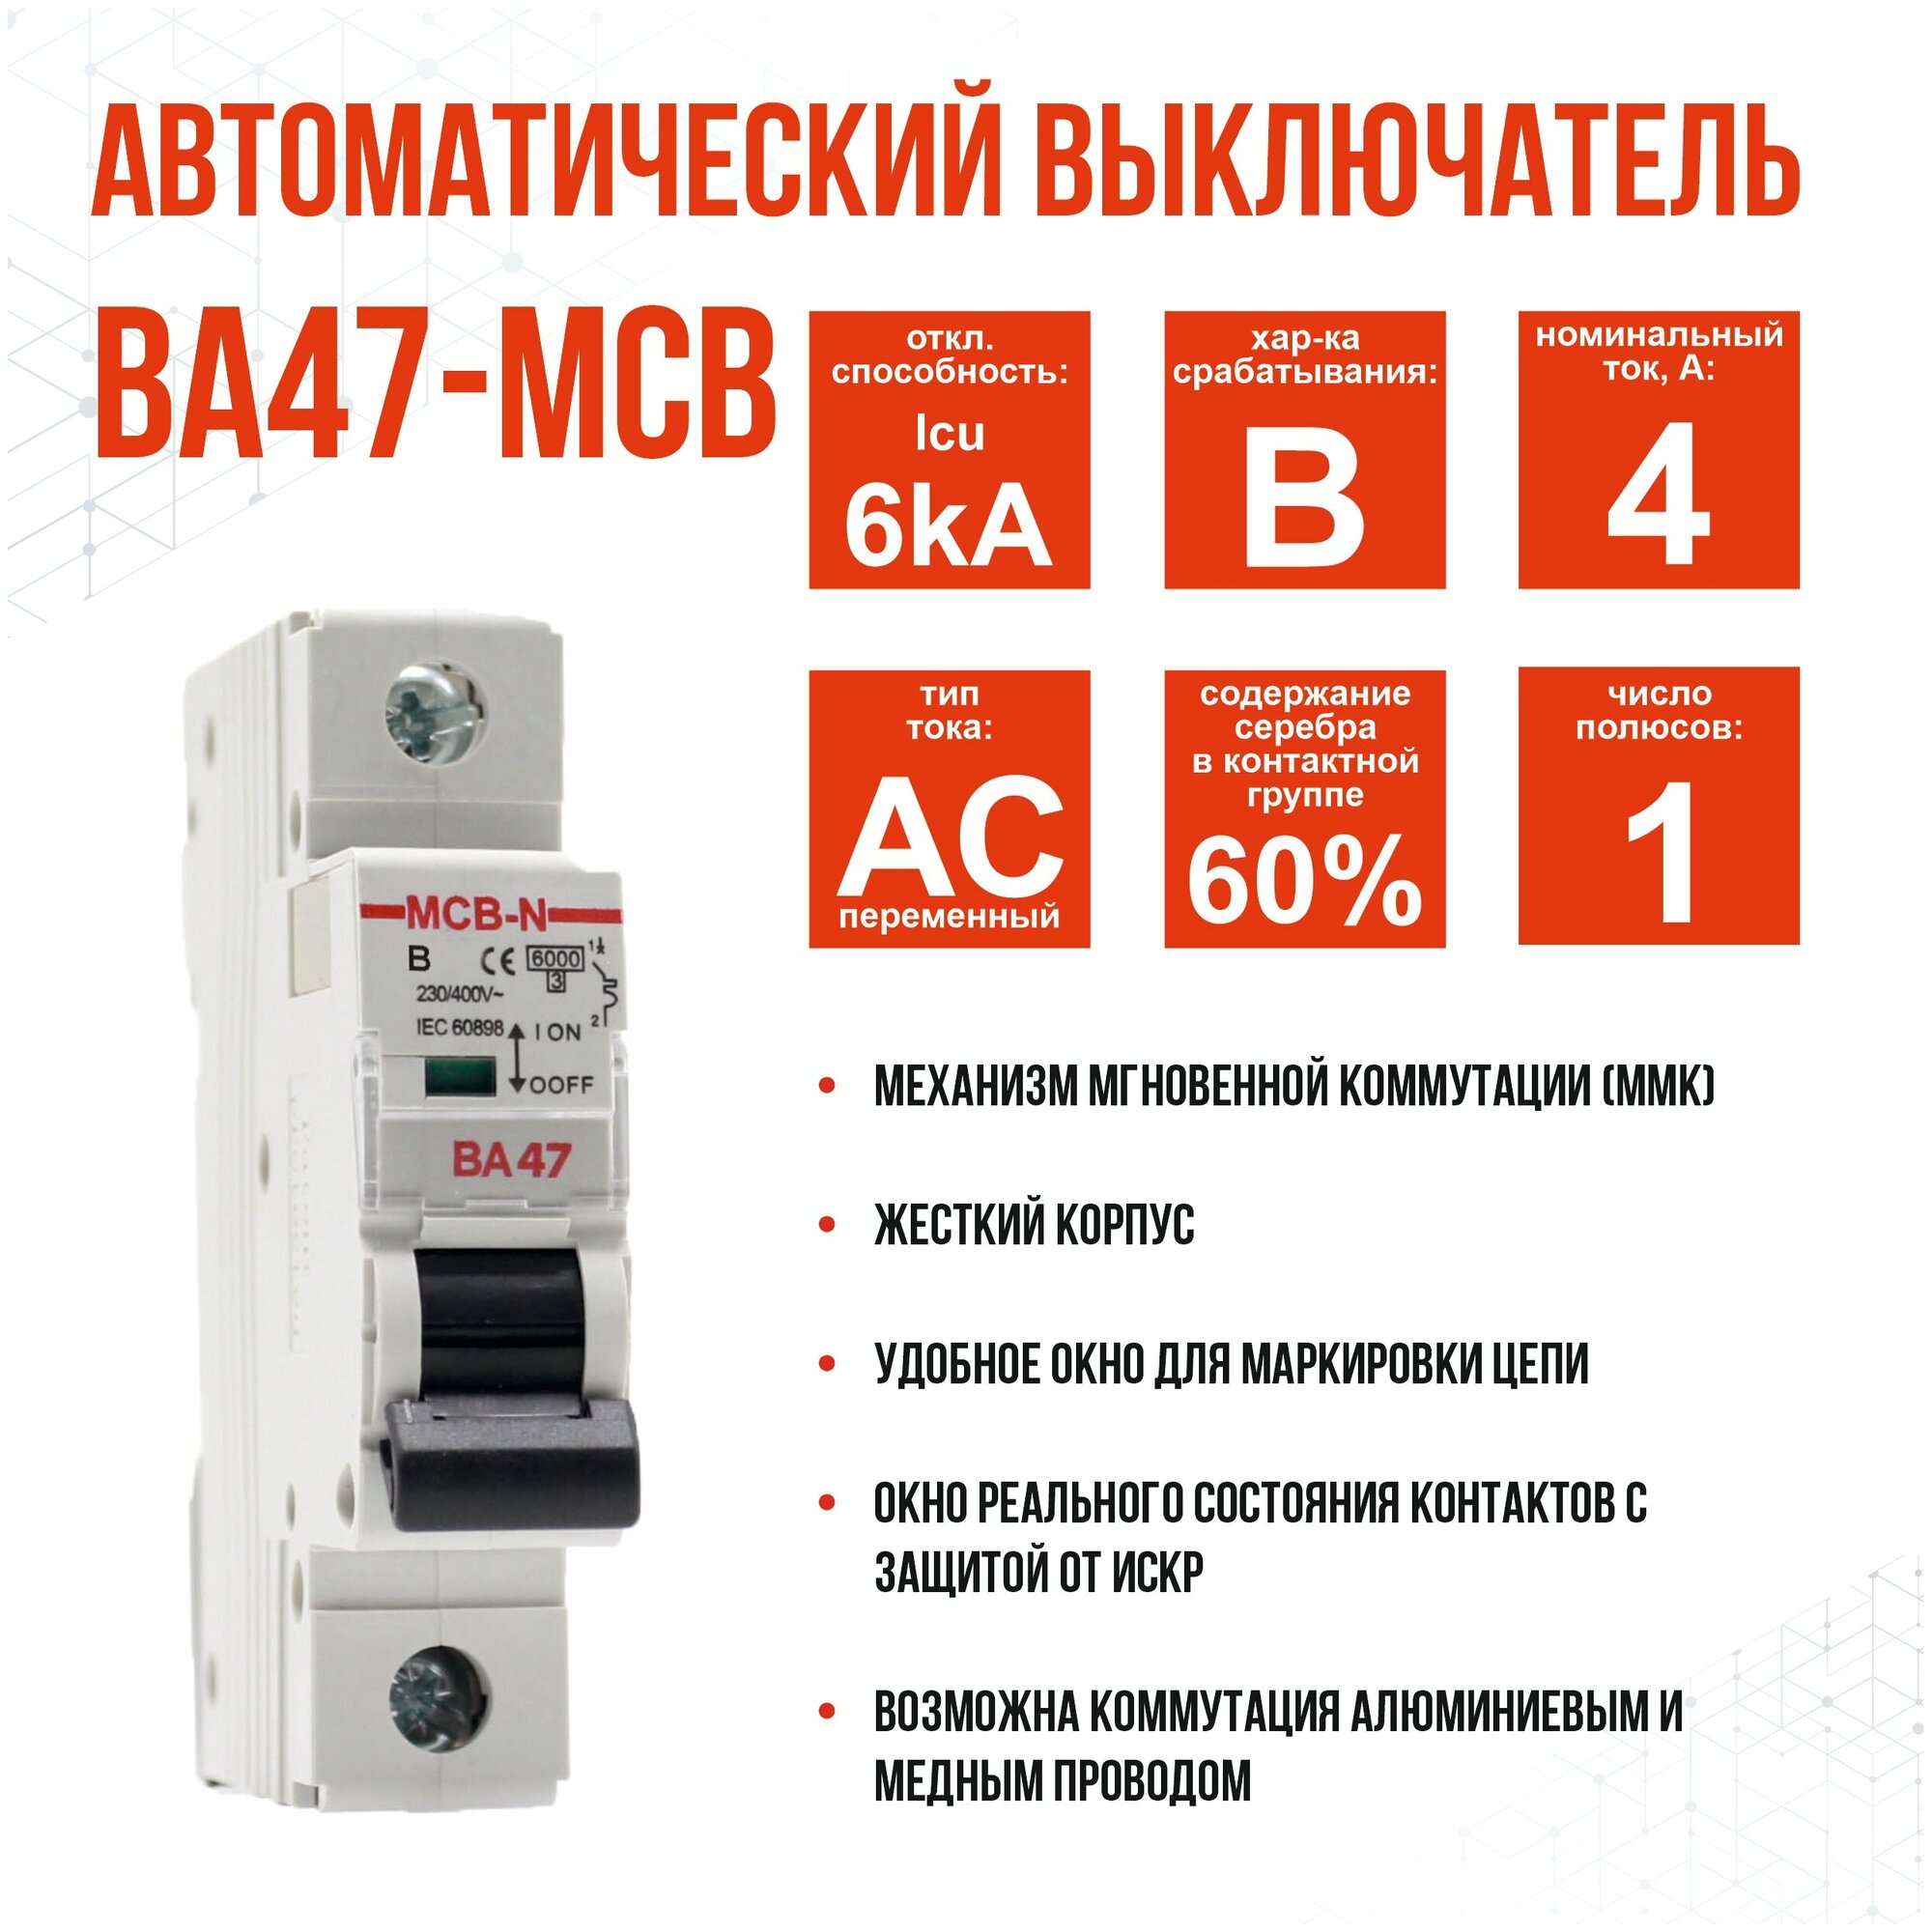 Выключатель автоматический AKEL ВА47-MCB-N-1P-B4-AC, 1 шт.